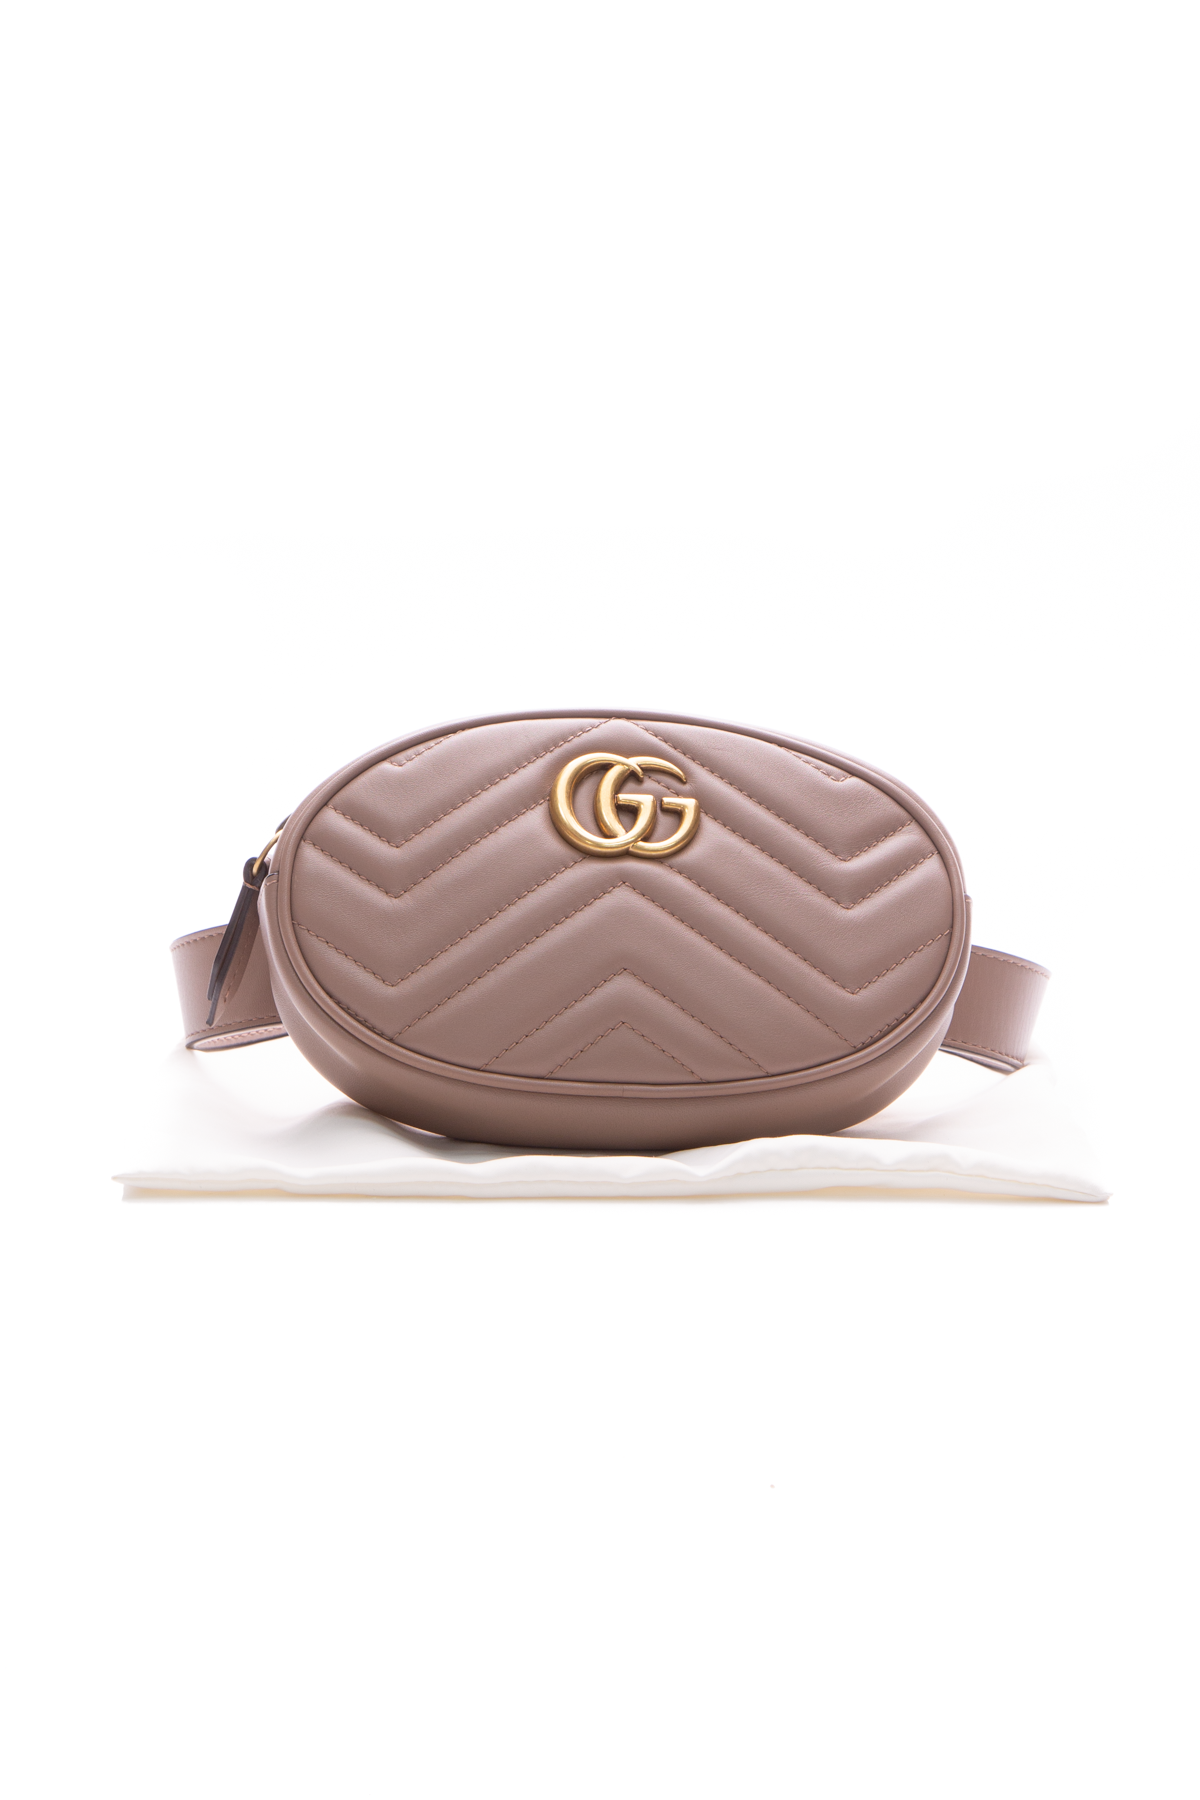 Gucci Belt Bag Fanny Pack GG Canvas | eBay